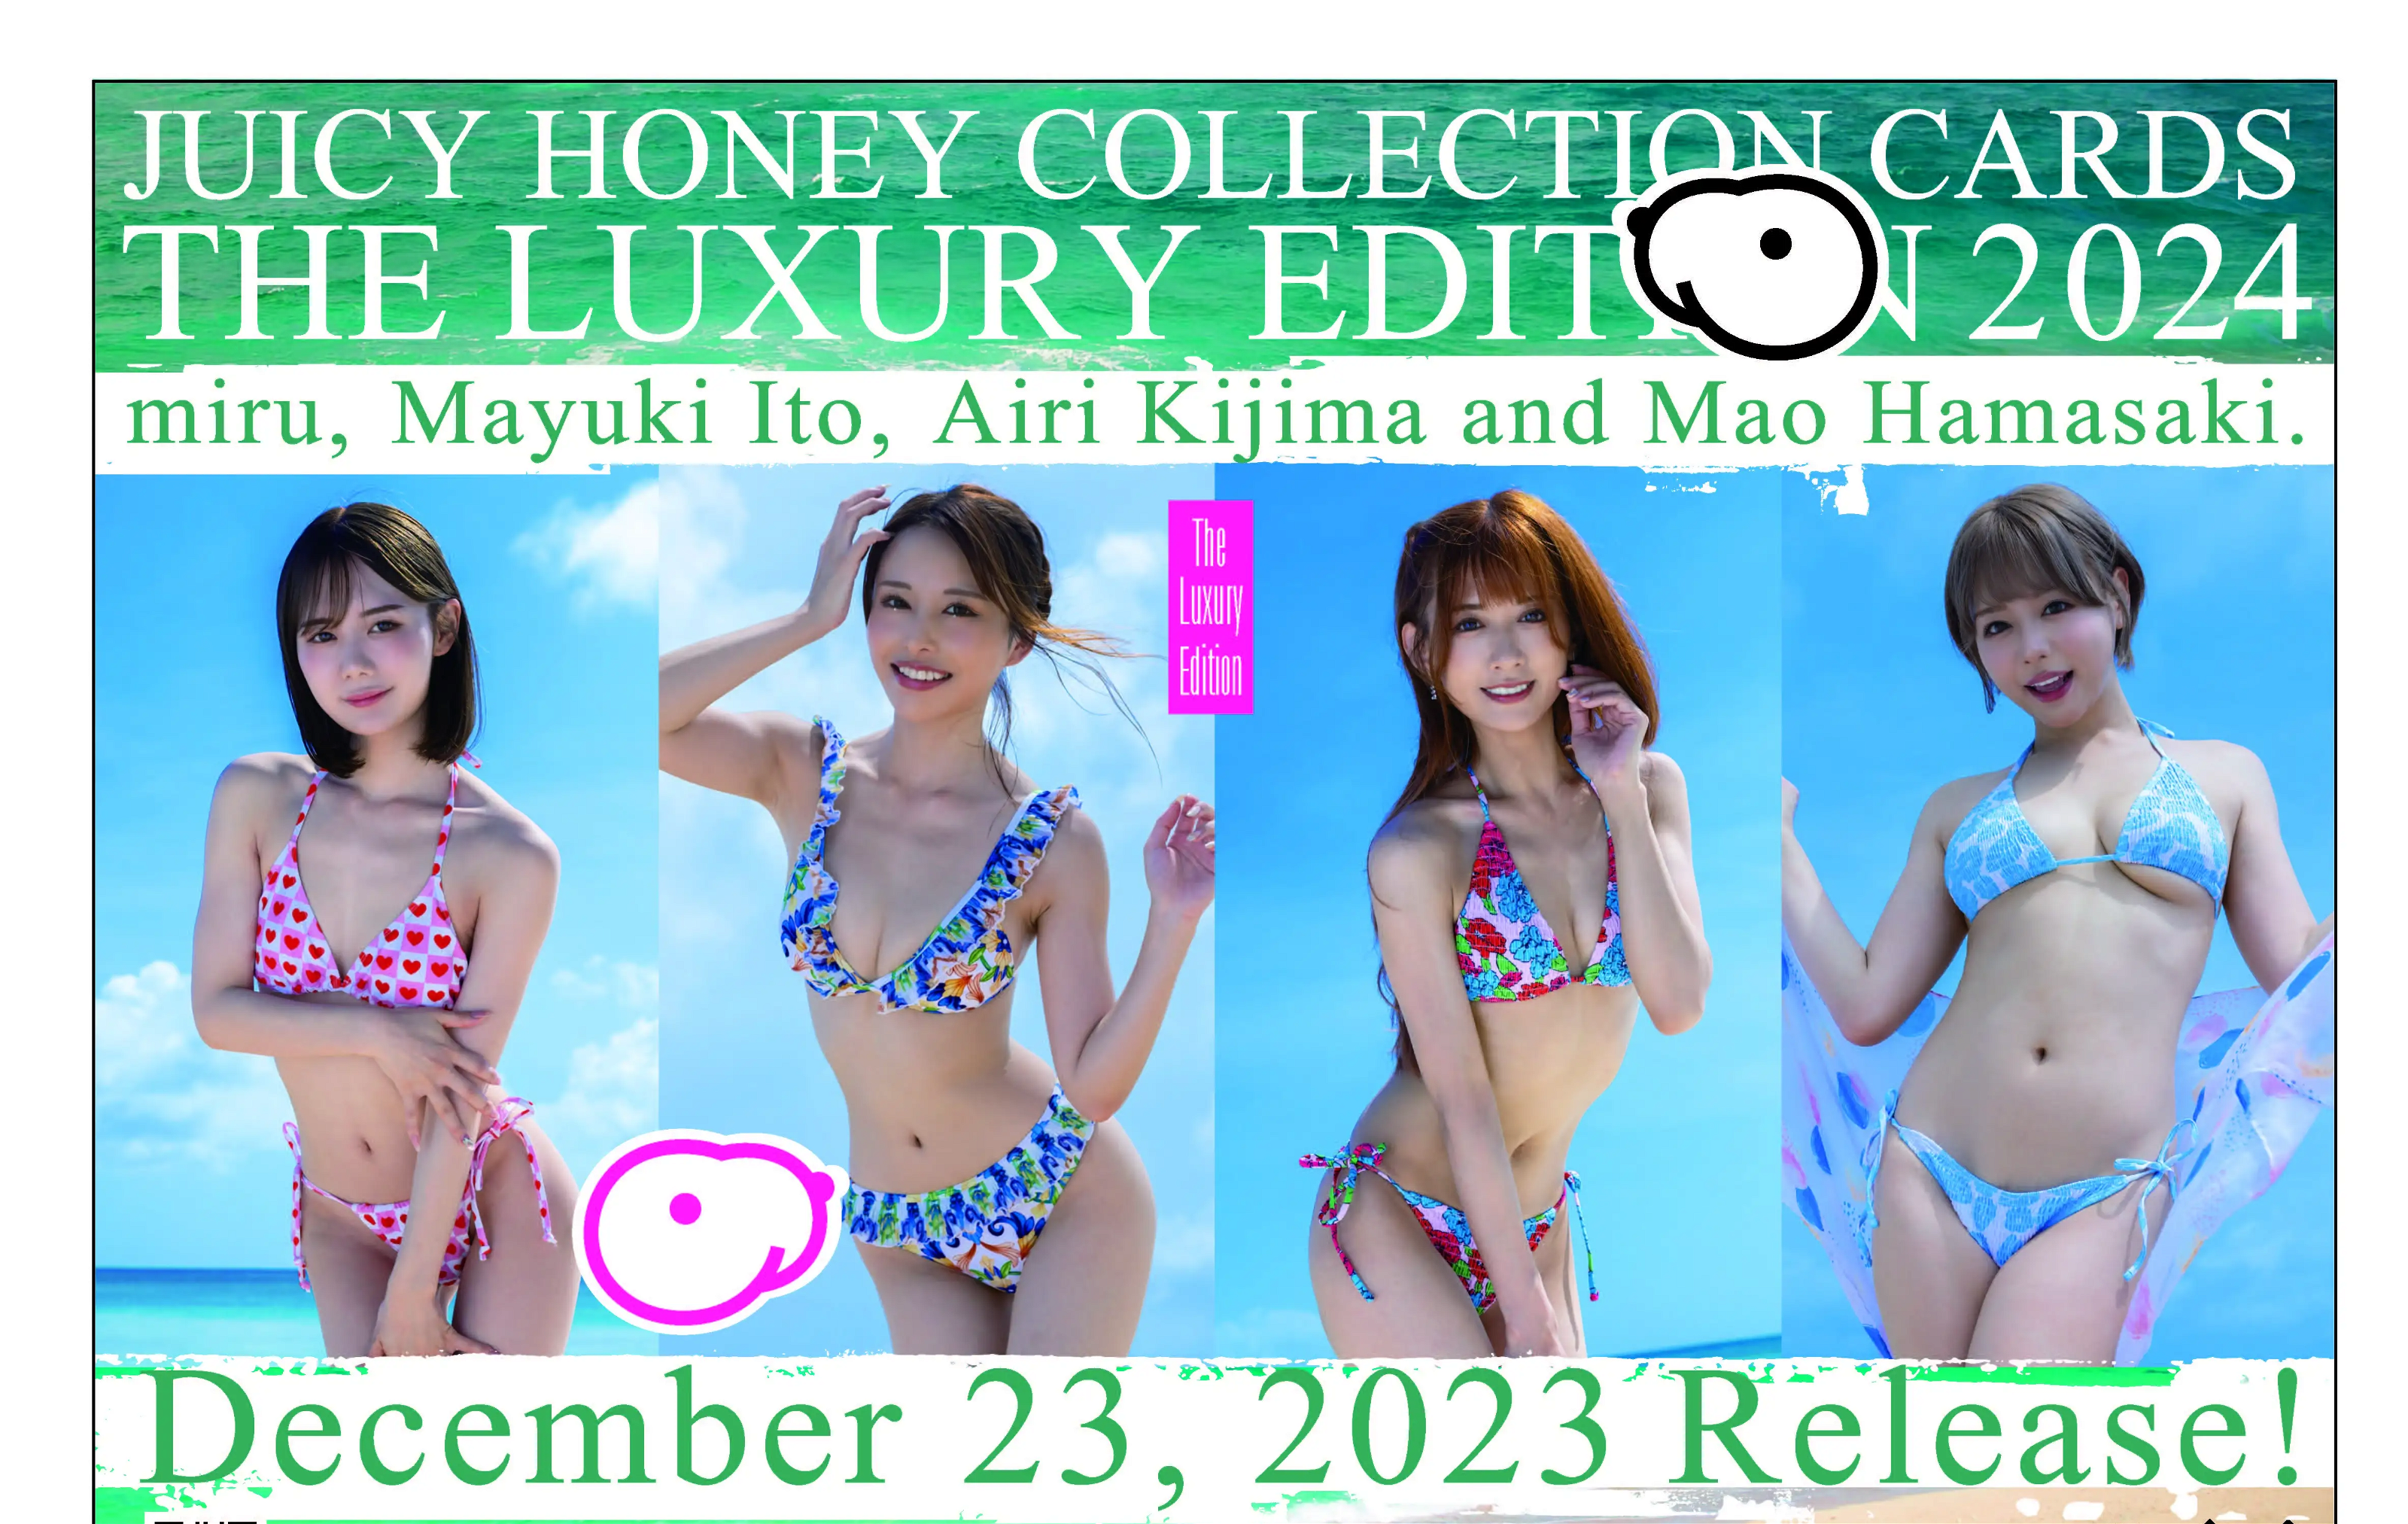 AVC Juicy Honey Collection Cards Luxury Edition 2024 Miru & Mayuki